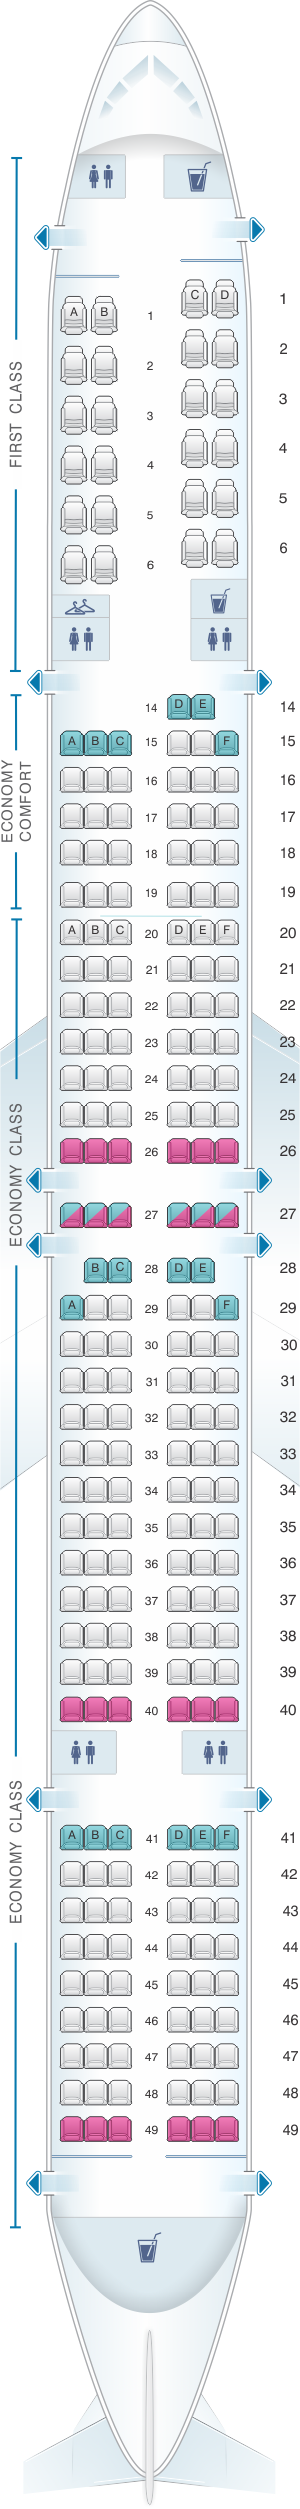 757 seat configuration